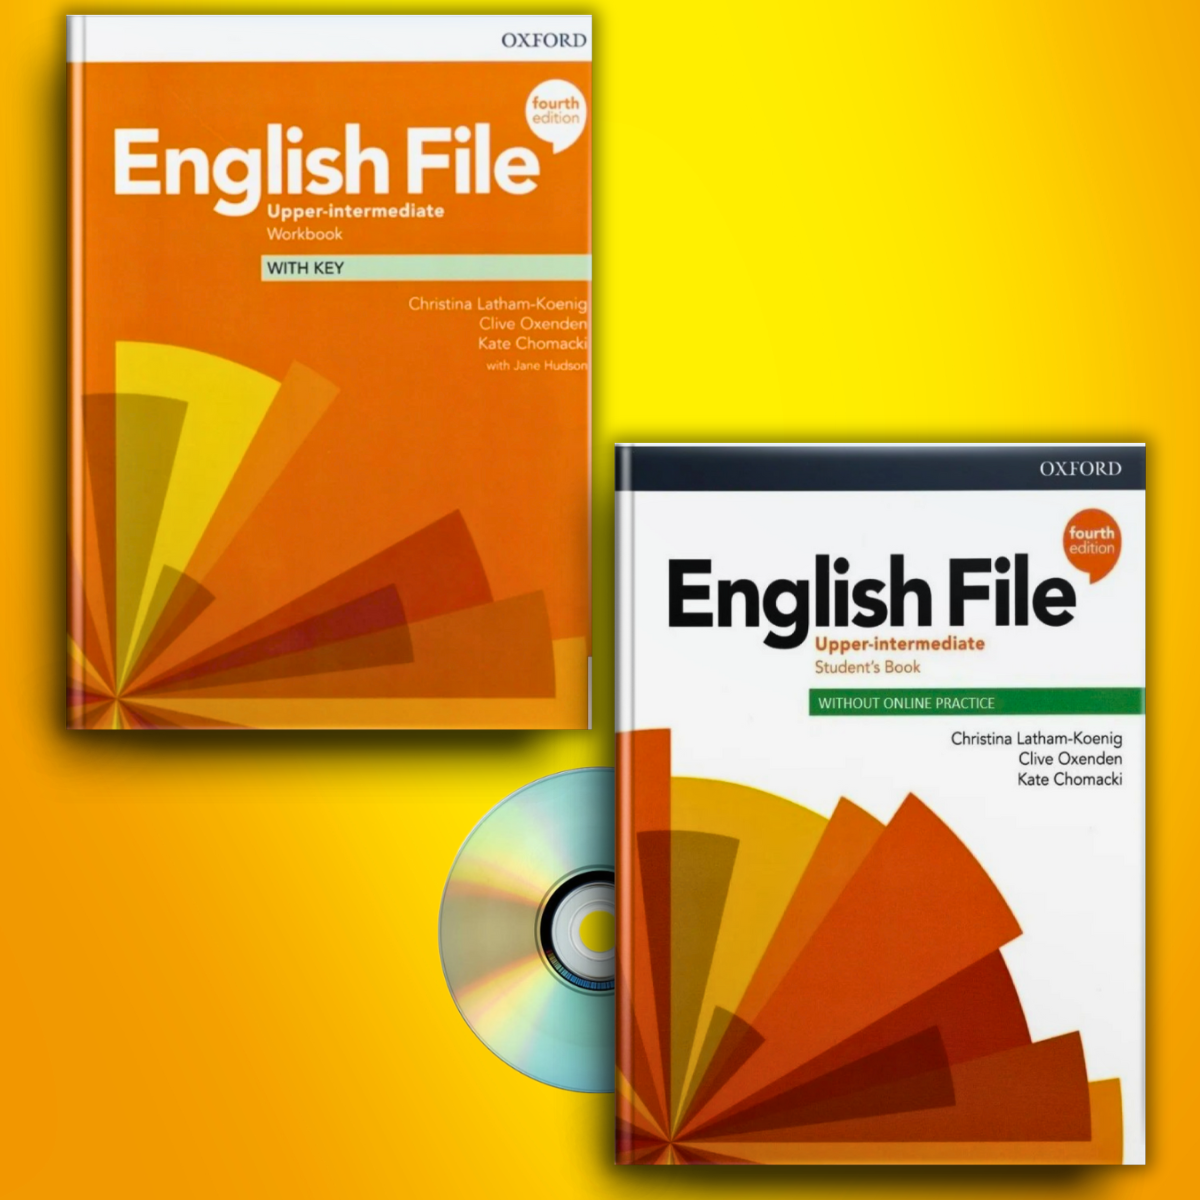 English File (4th) Upper-Intermediate комплект (без кода доступа к онлайн-ресурсам)